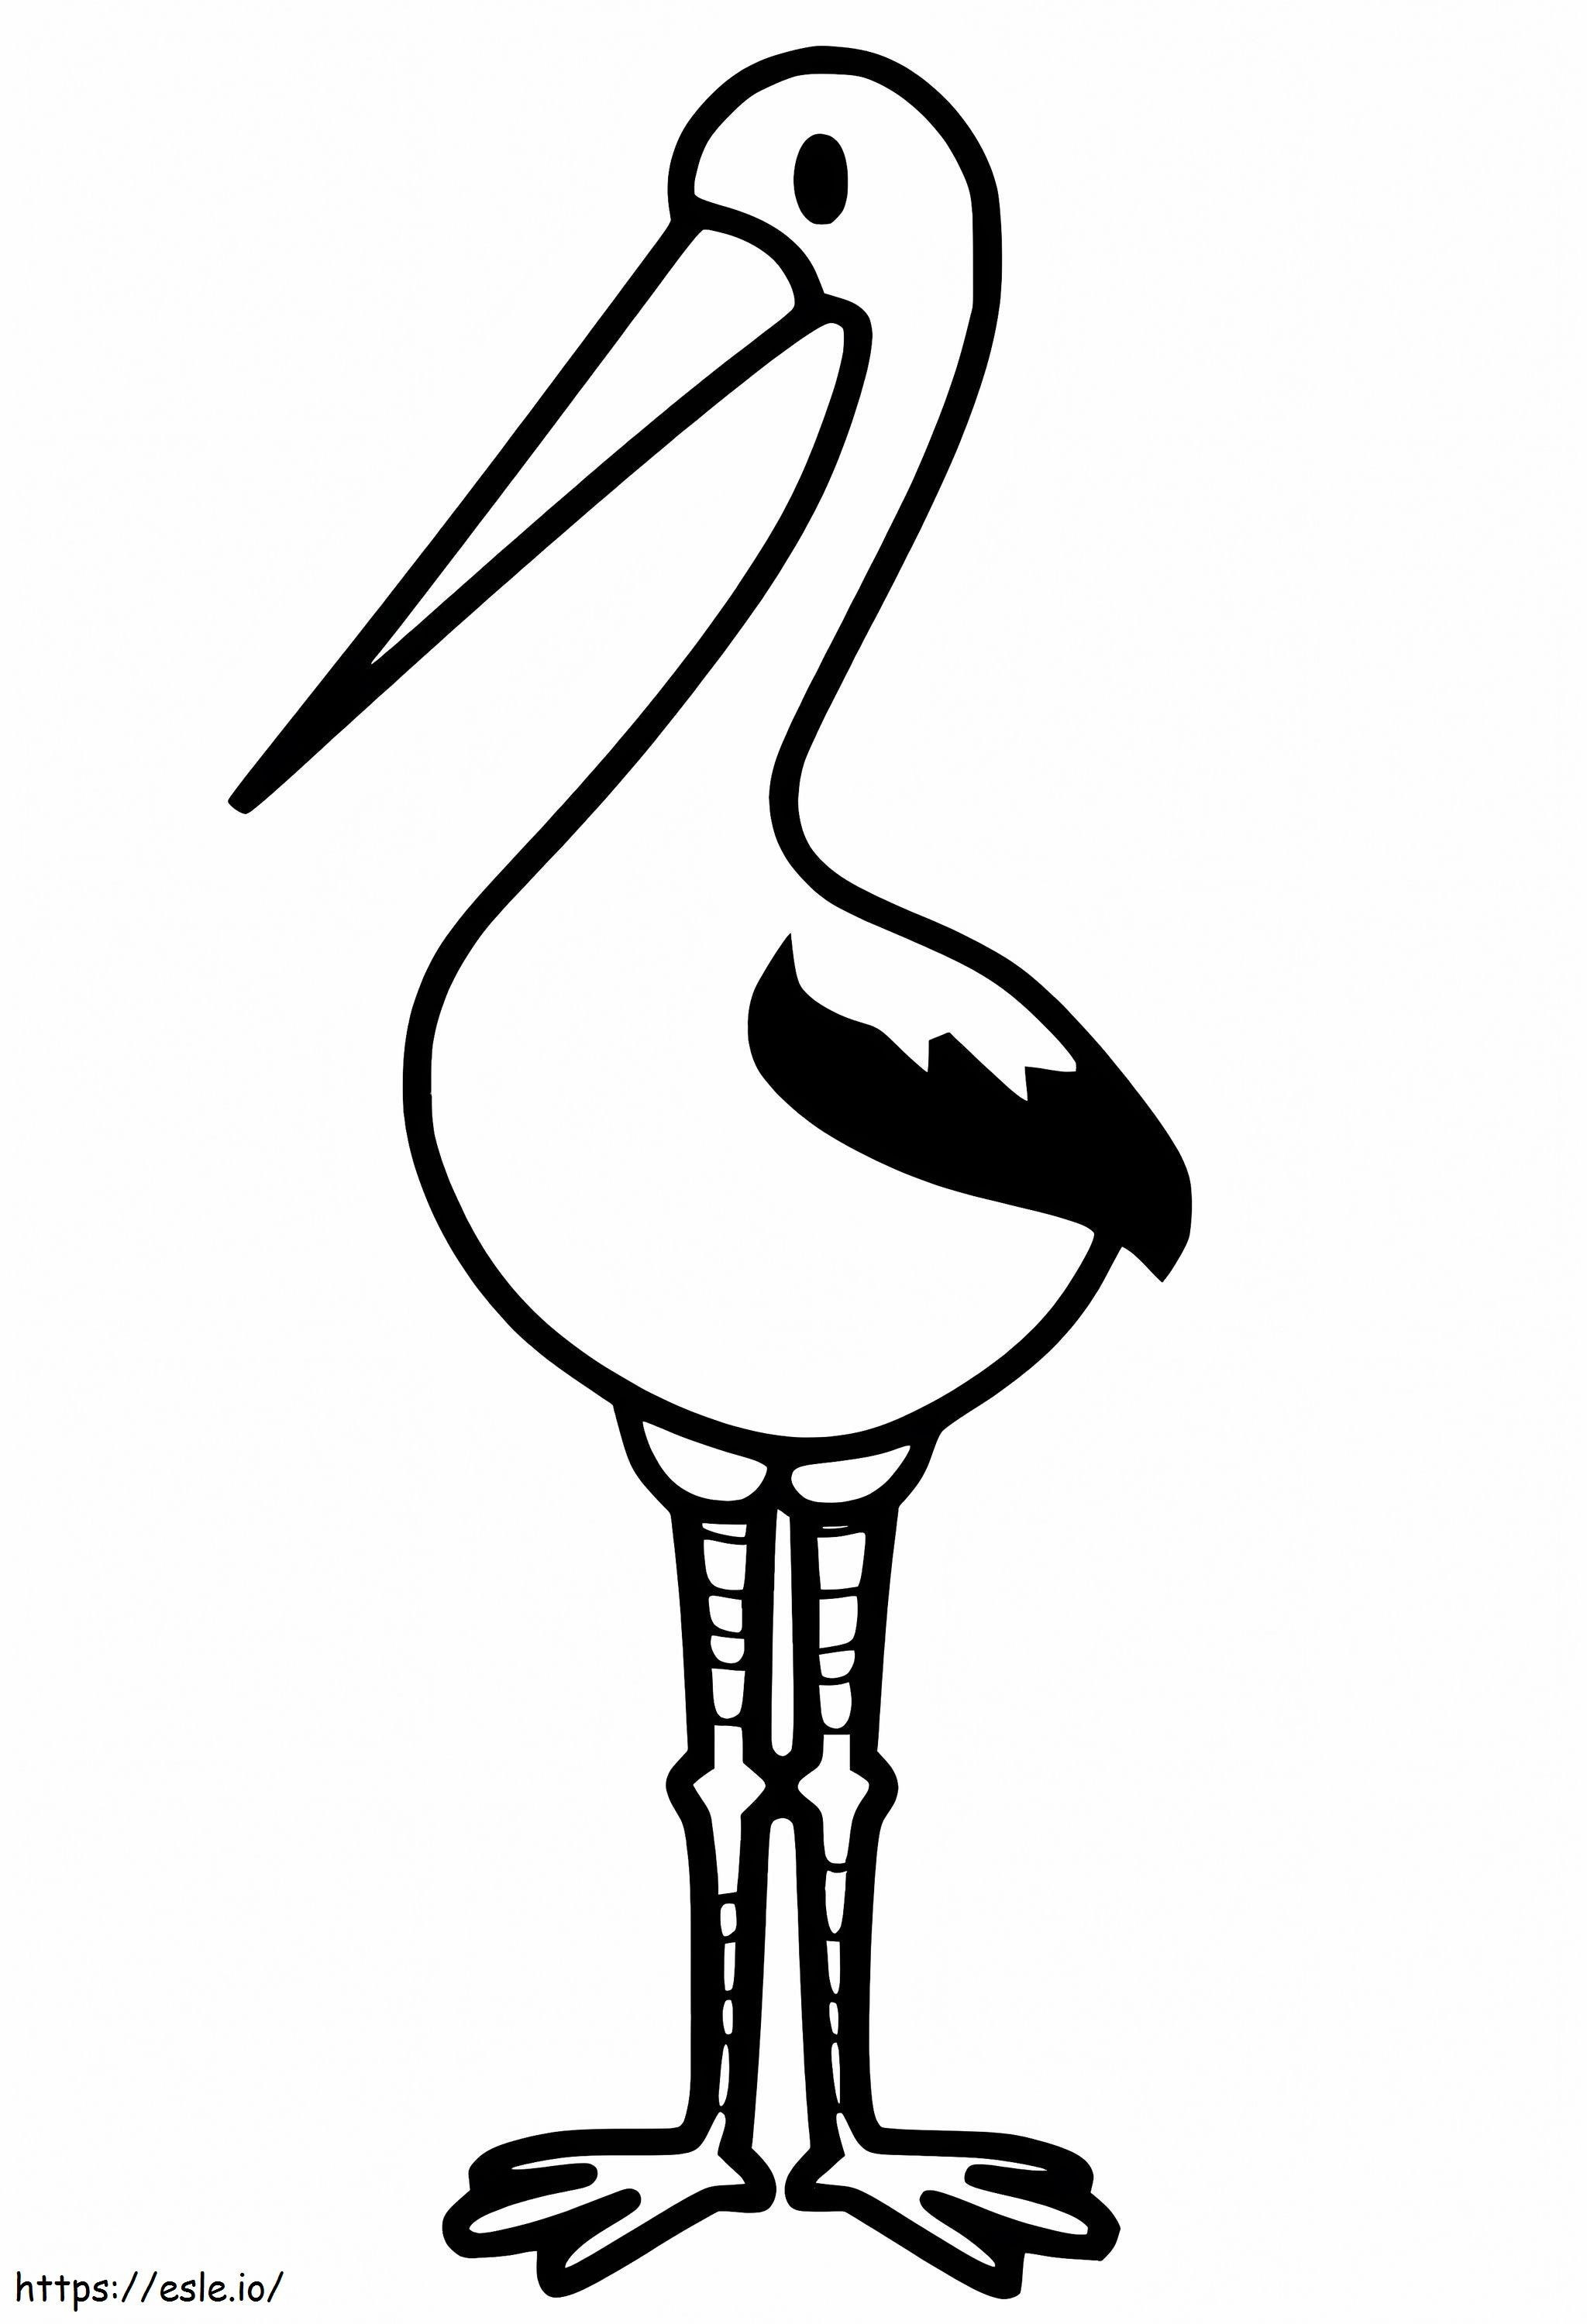 Printable Stork coloring page